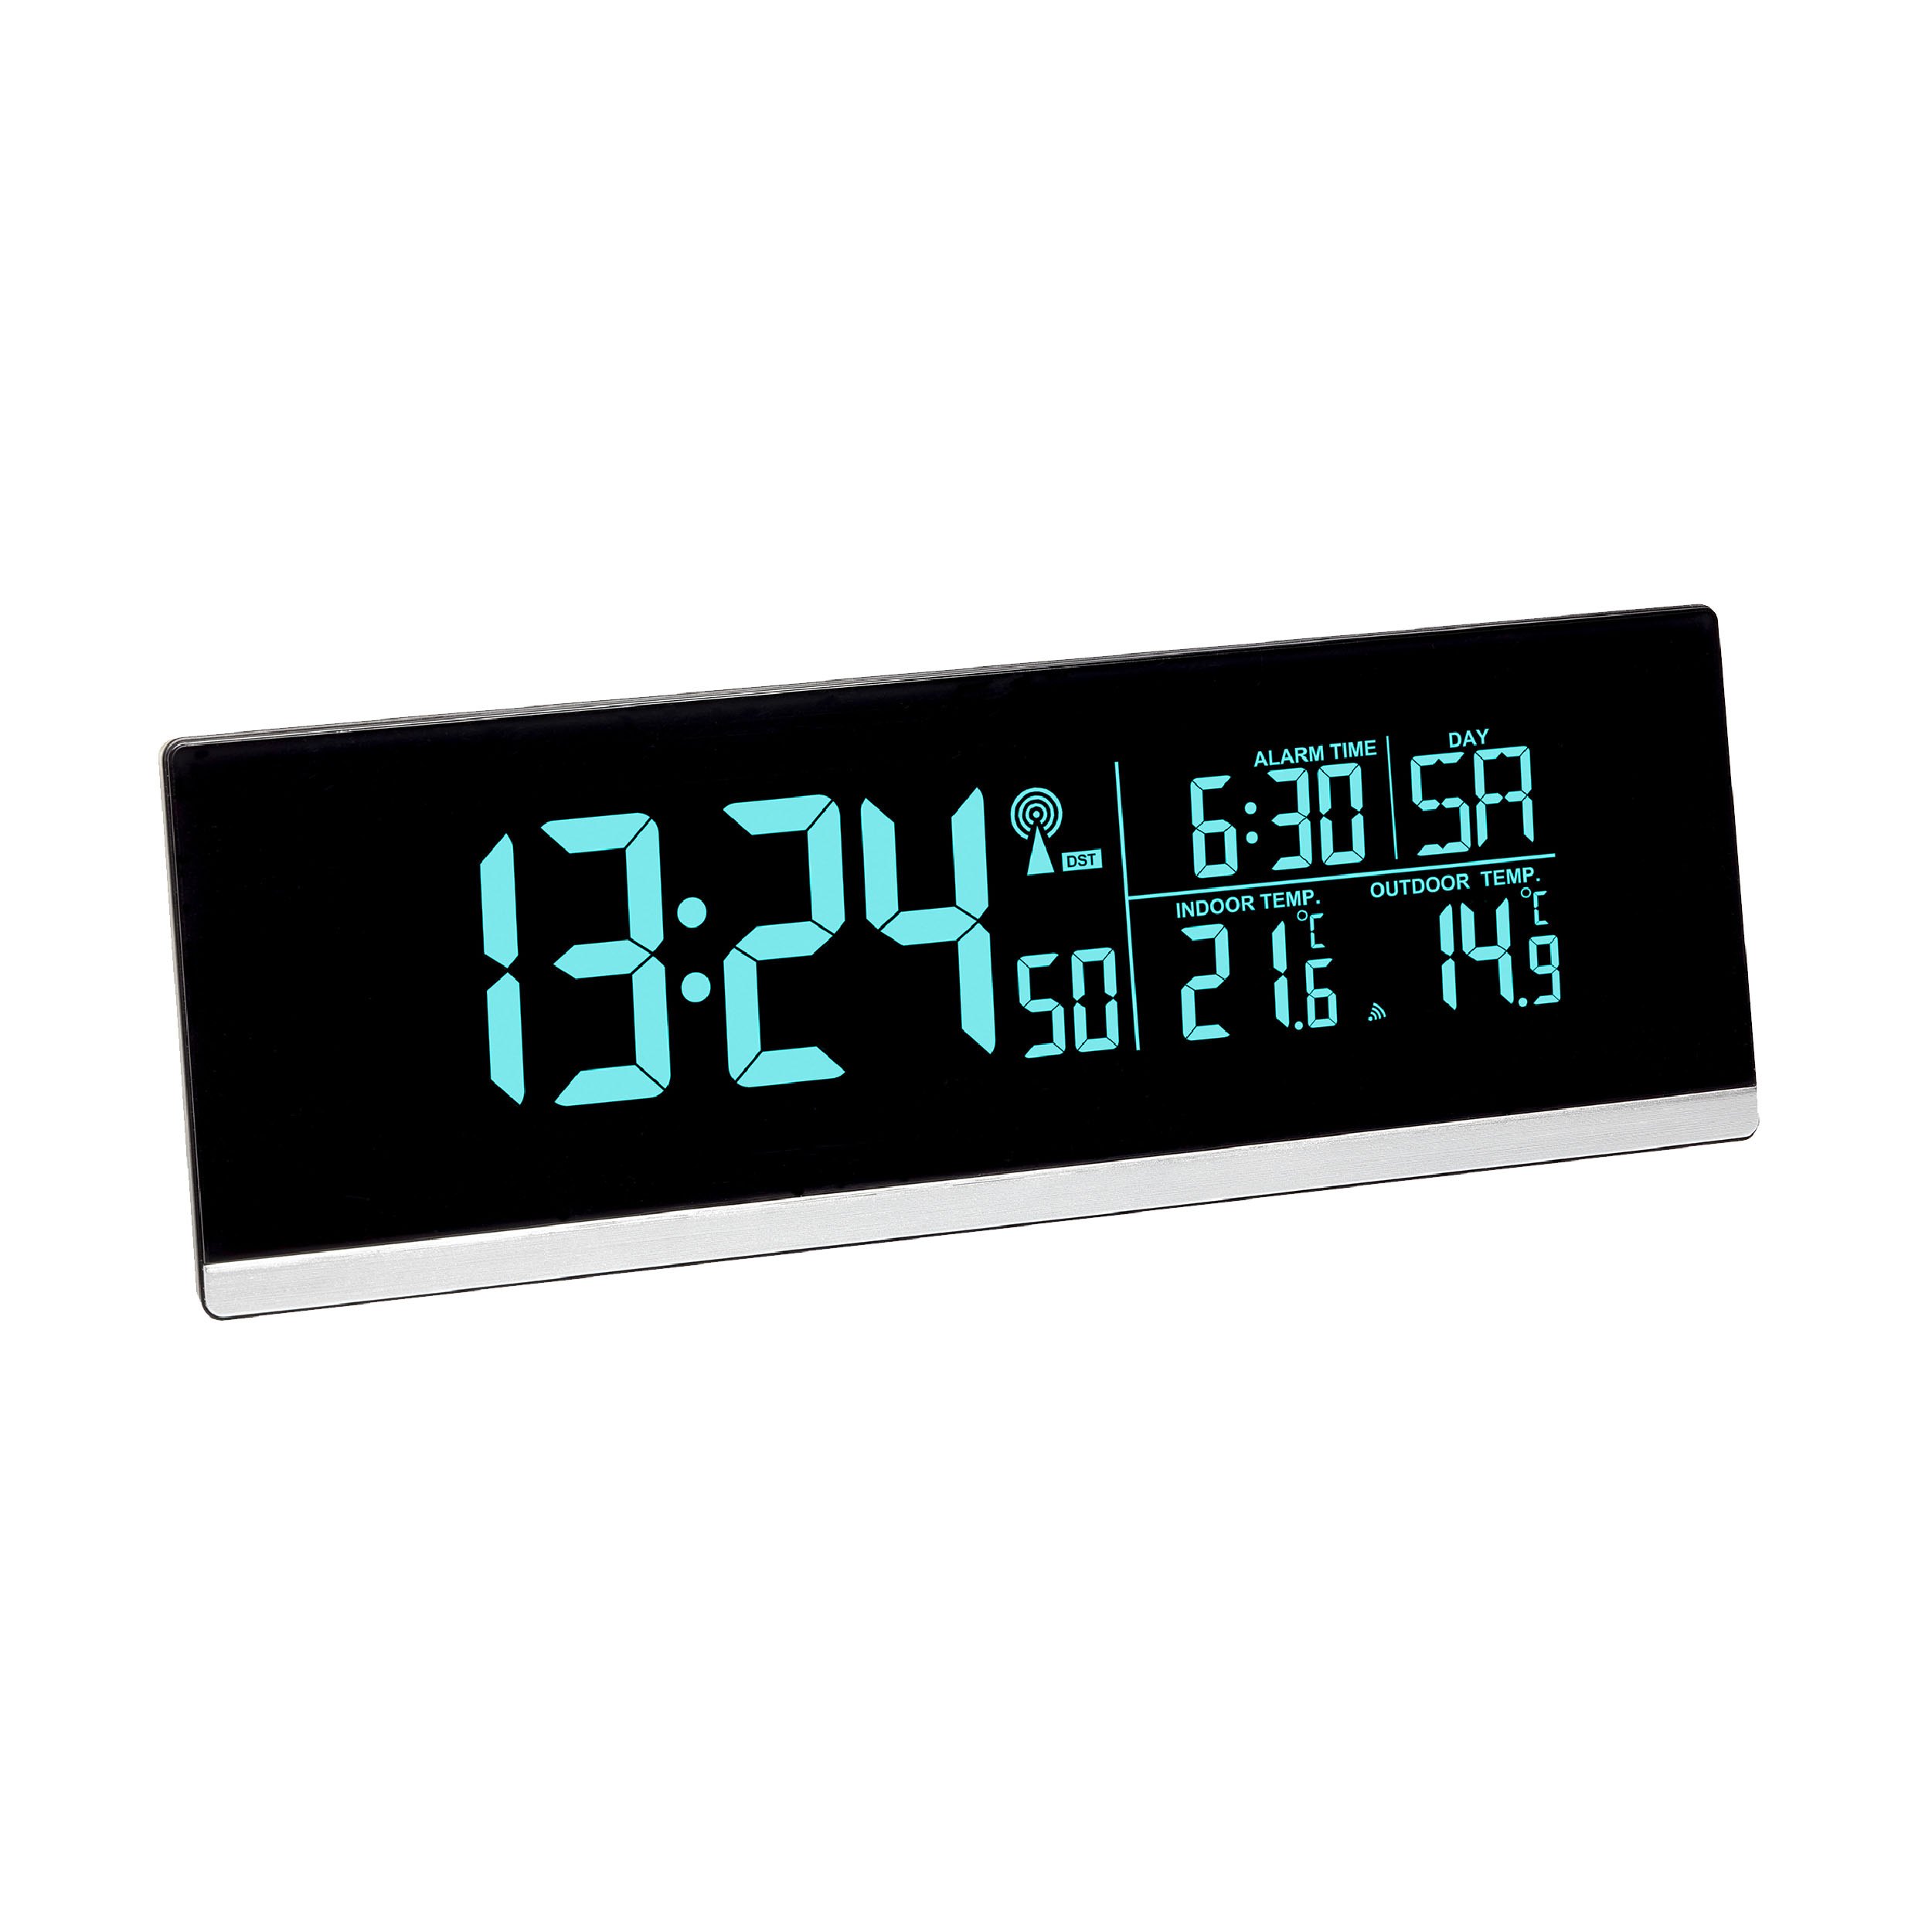 LED Farbdisplay Wecker Digital Uhr Alarm Thermometer Hygrometer Snooze DE NEU 